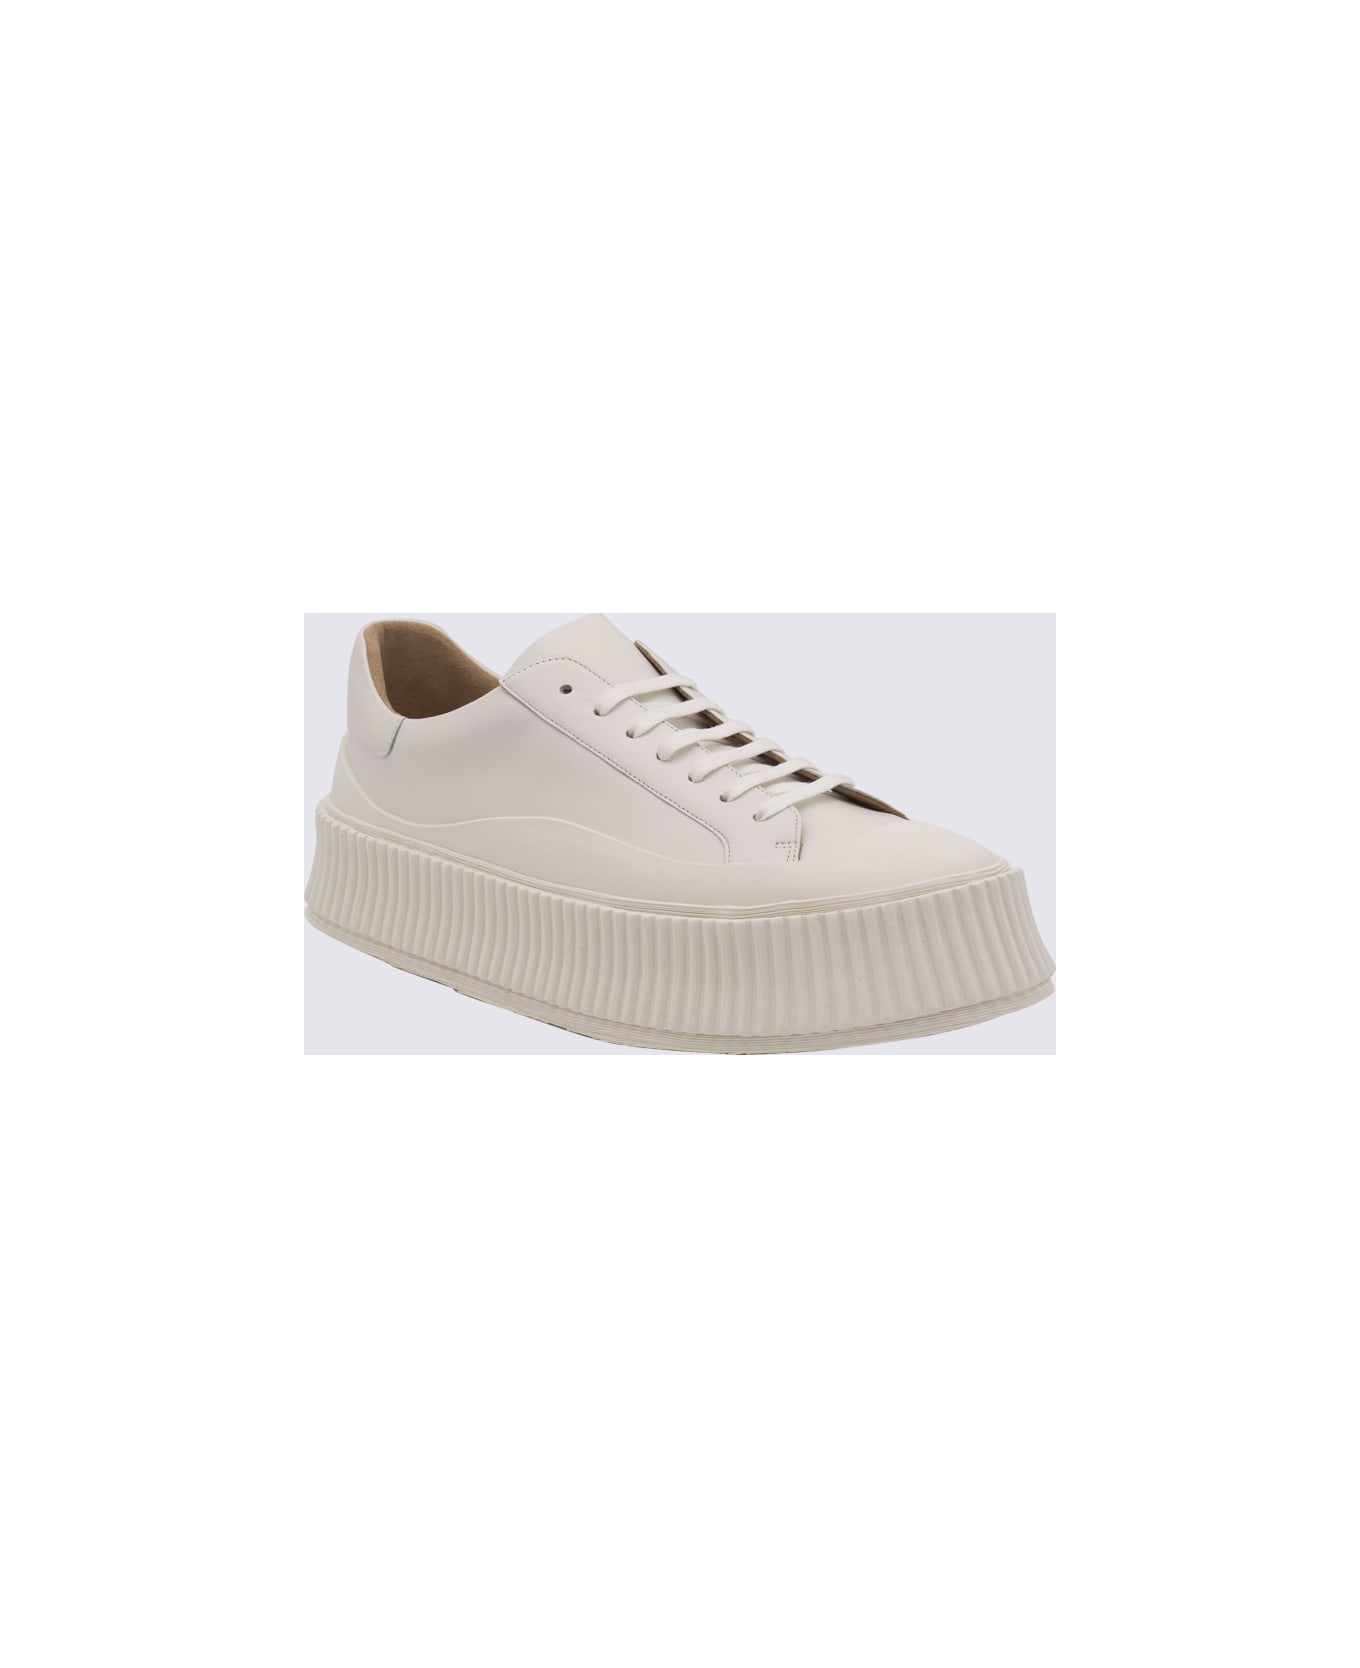 Jil Sander White Leather Sneakers - Beige スニーカー